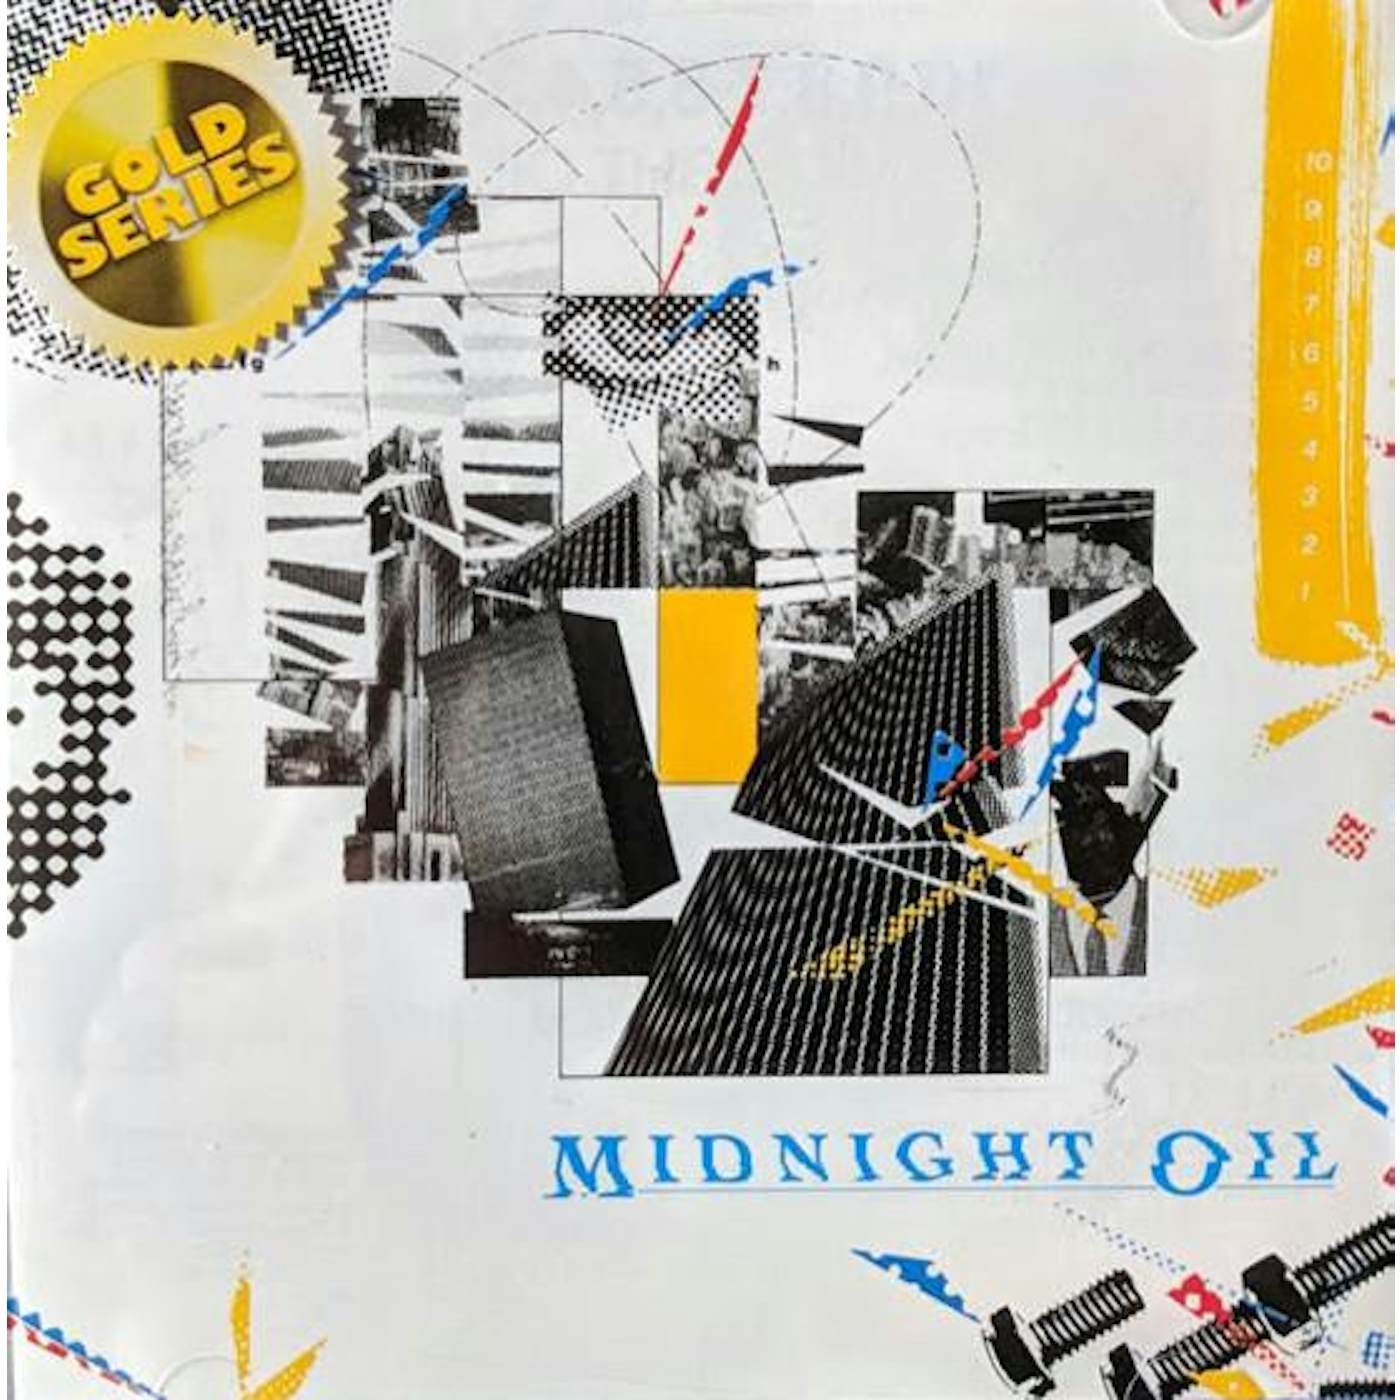 Midnight Oil 10,9,8,7,6,5,4,3,2,1 (GOLD SERIES) CD